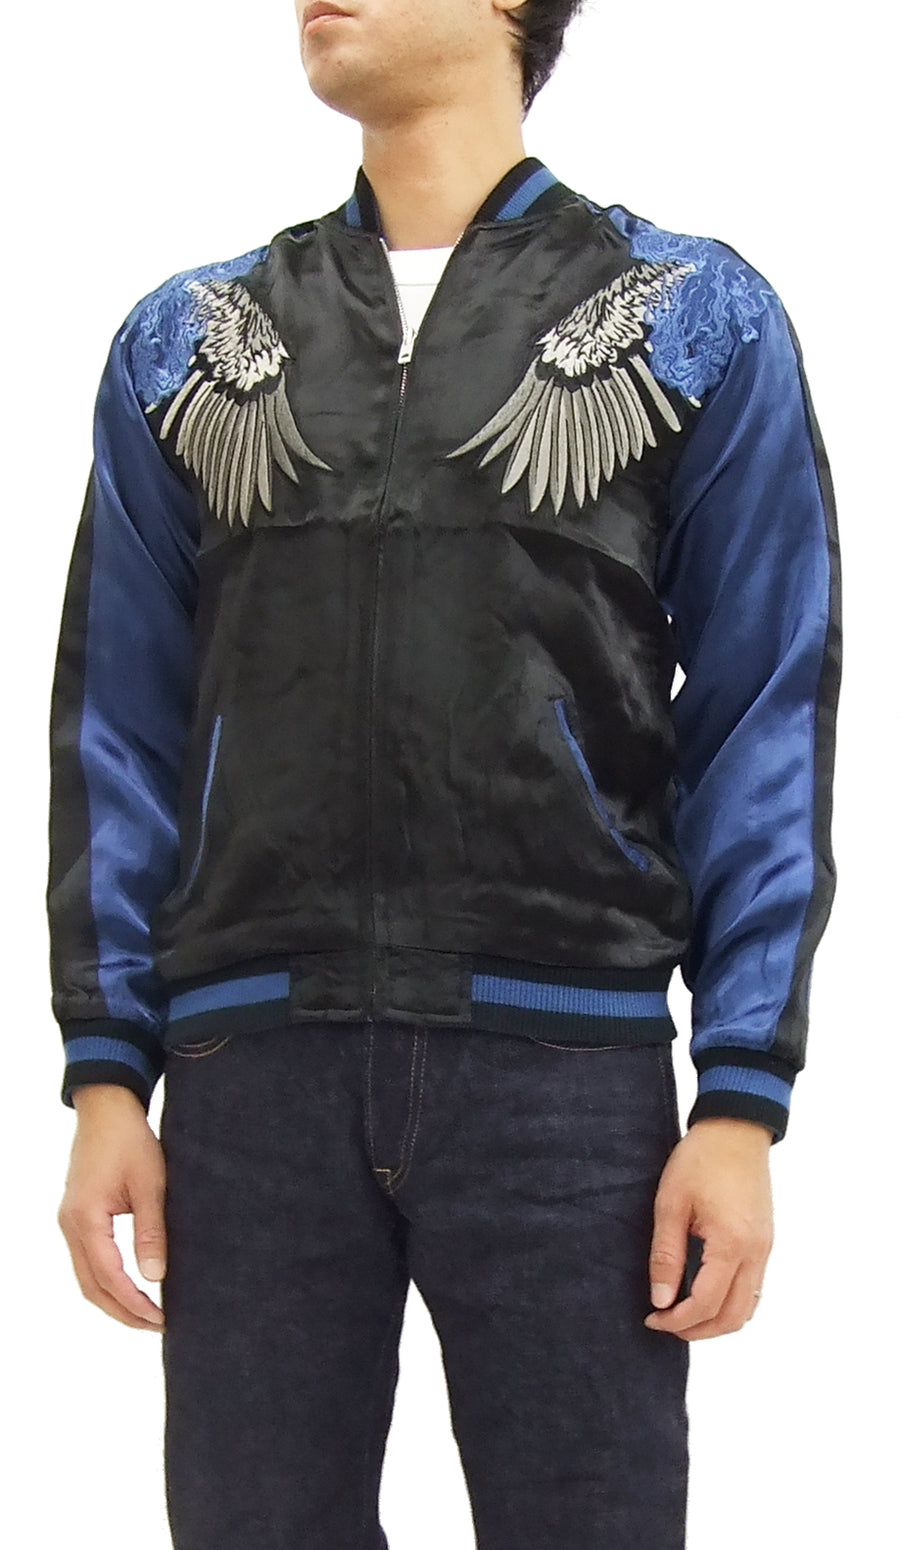 Hanatabi Gakudan Men's Japanese Souvenir Jacket Japanese Raven